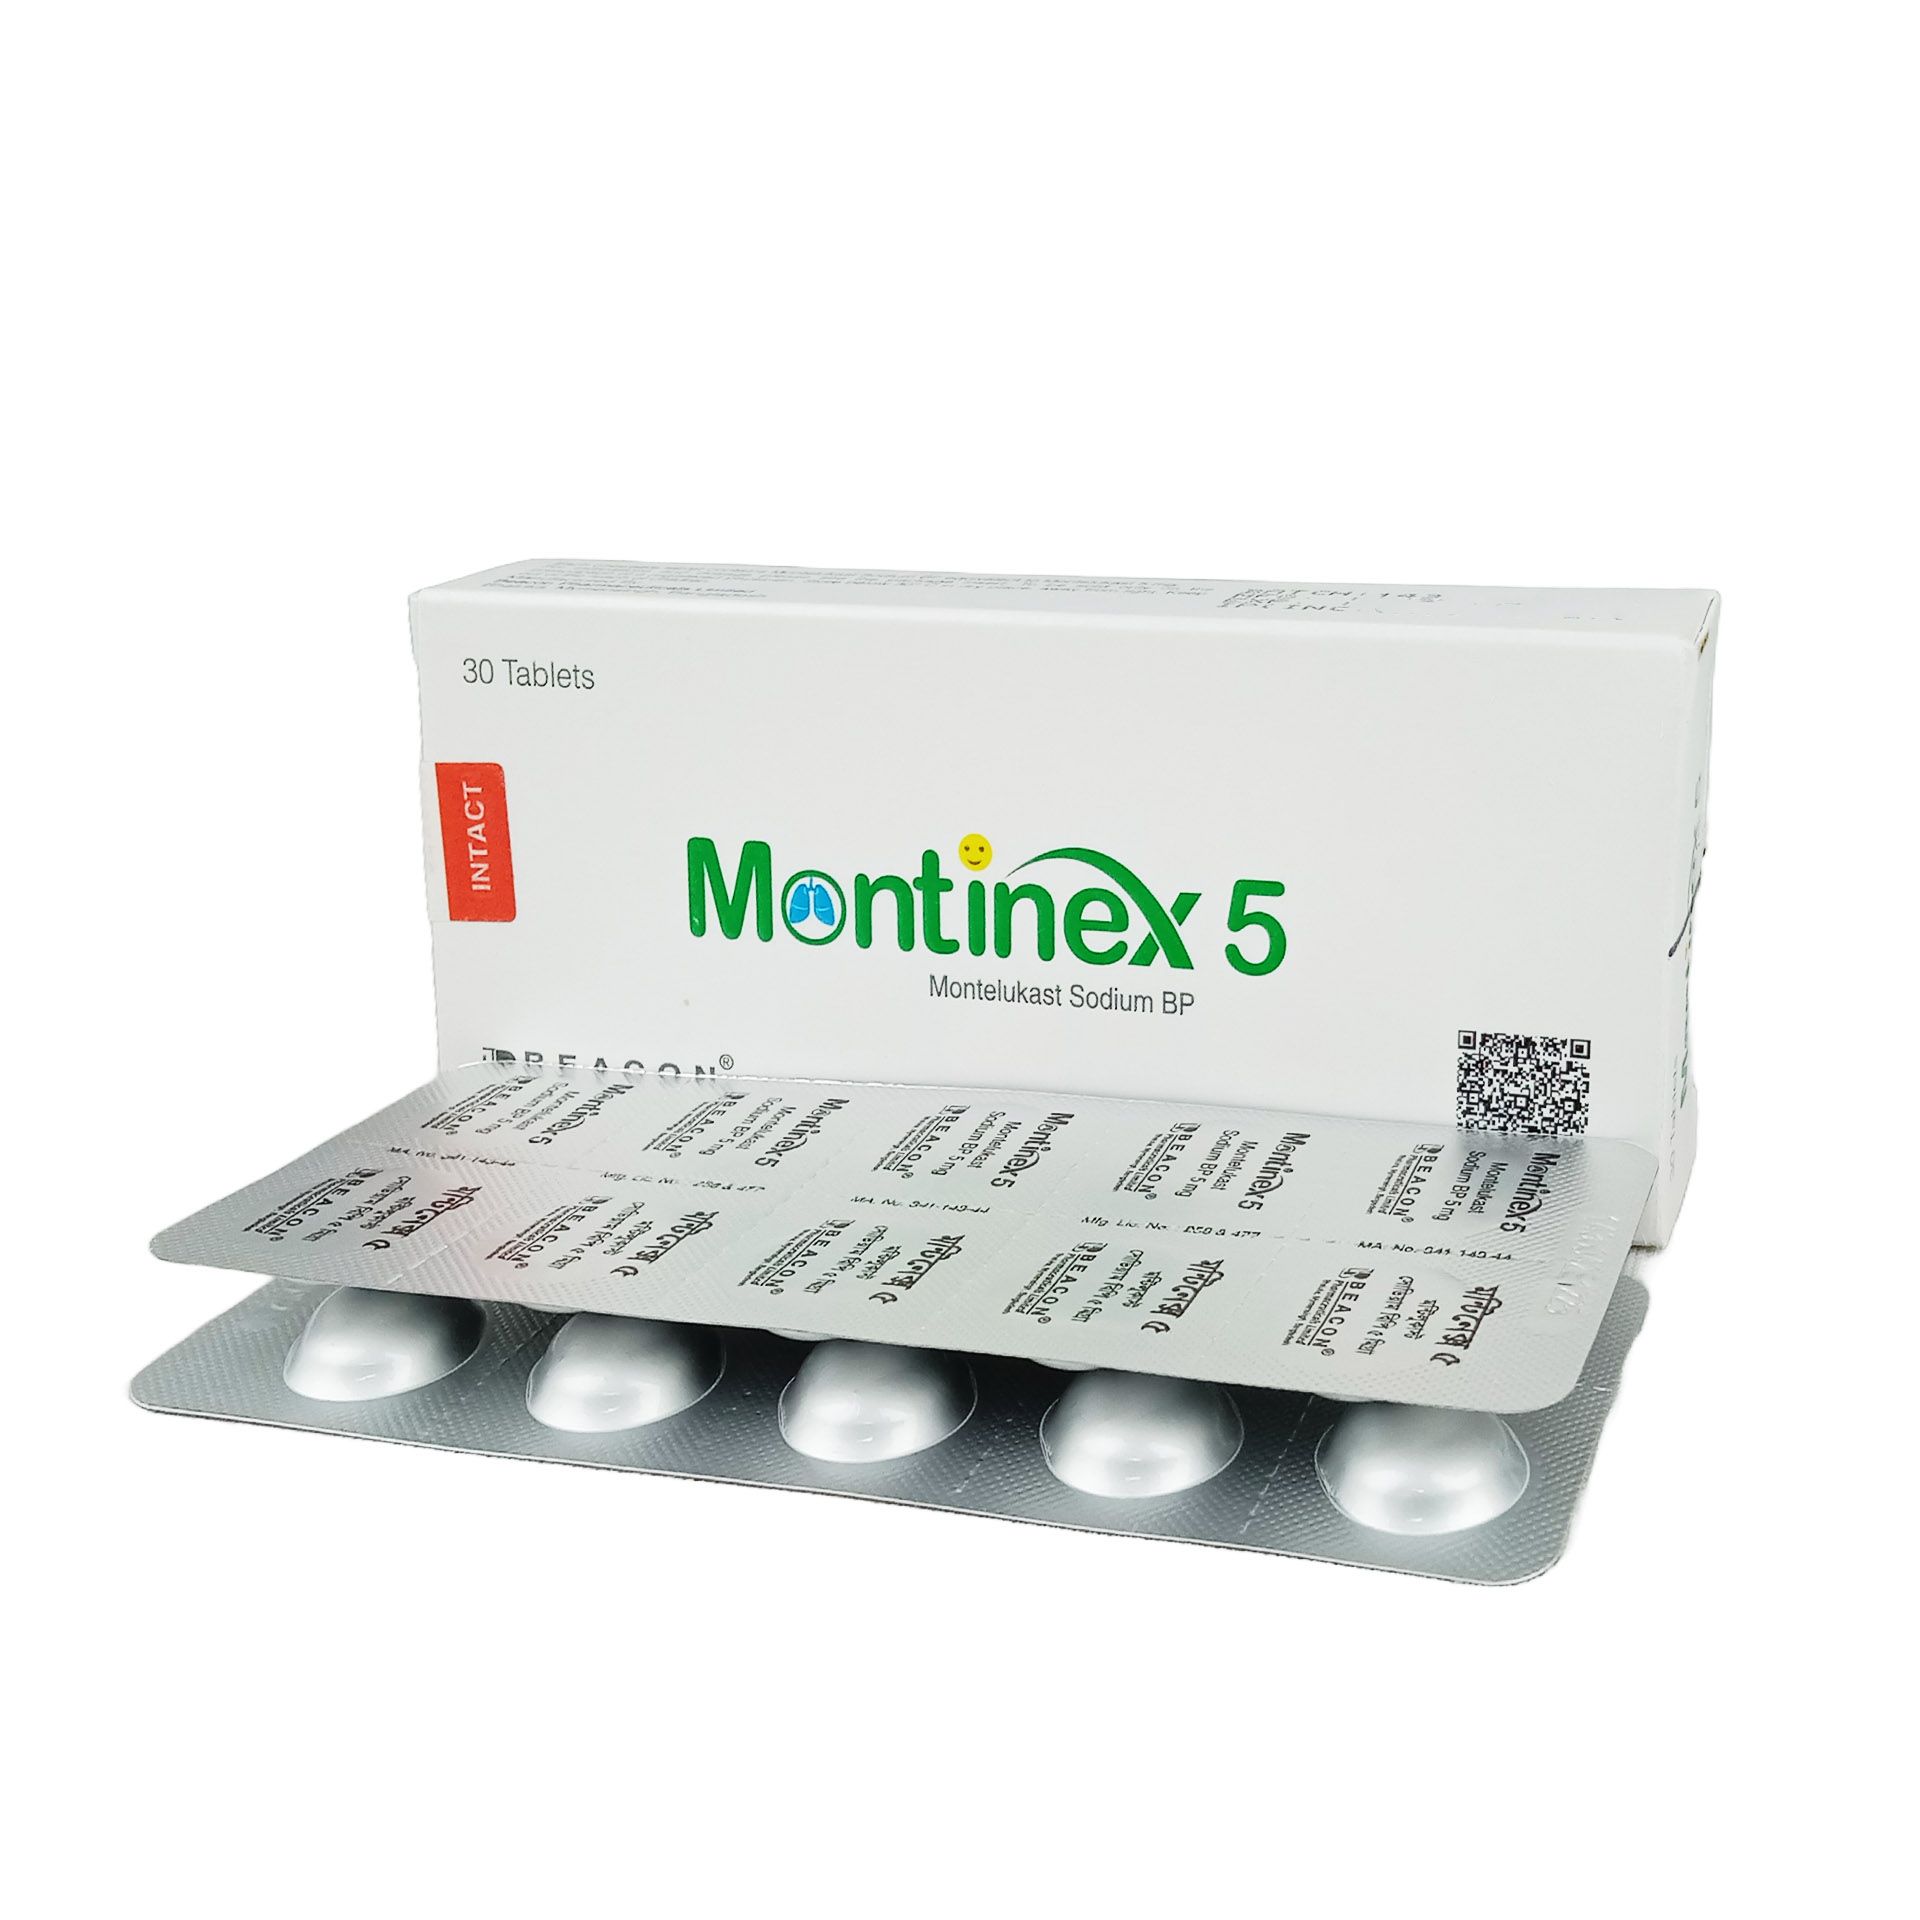 Montinex 5mg Tablet